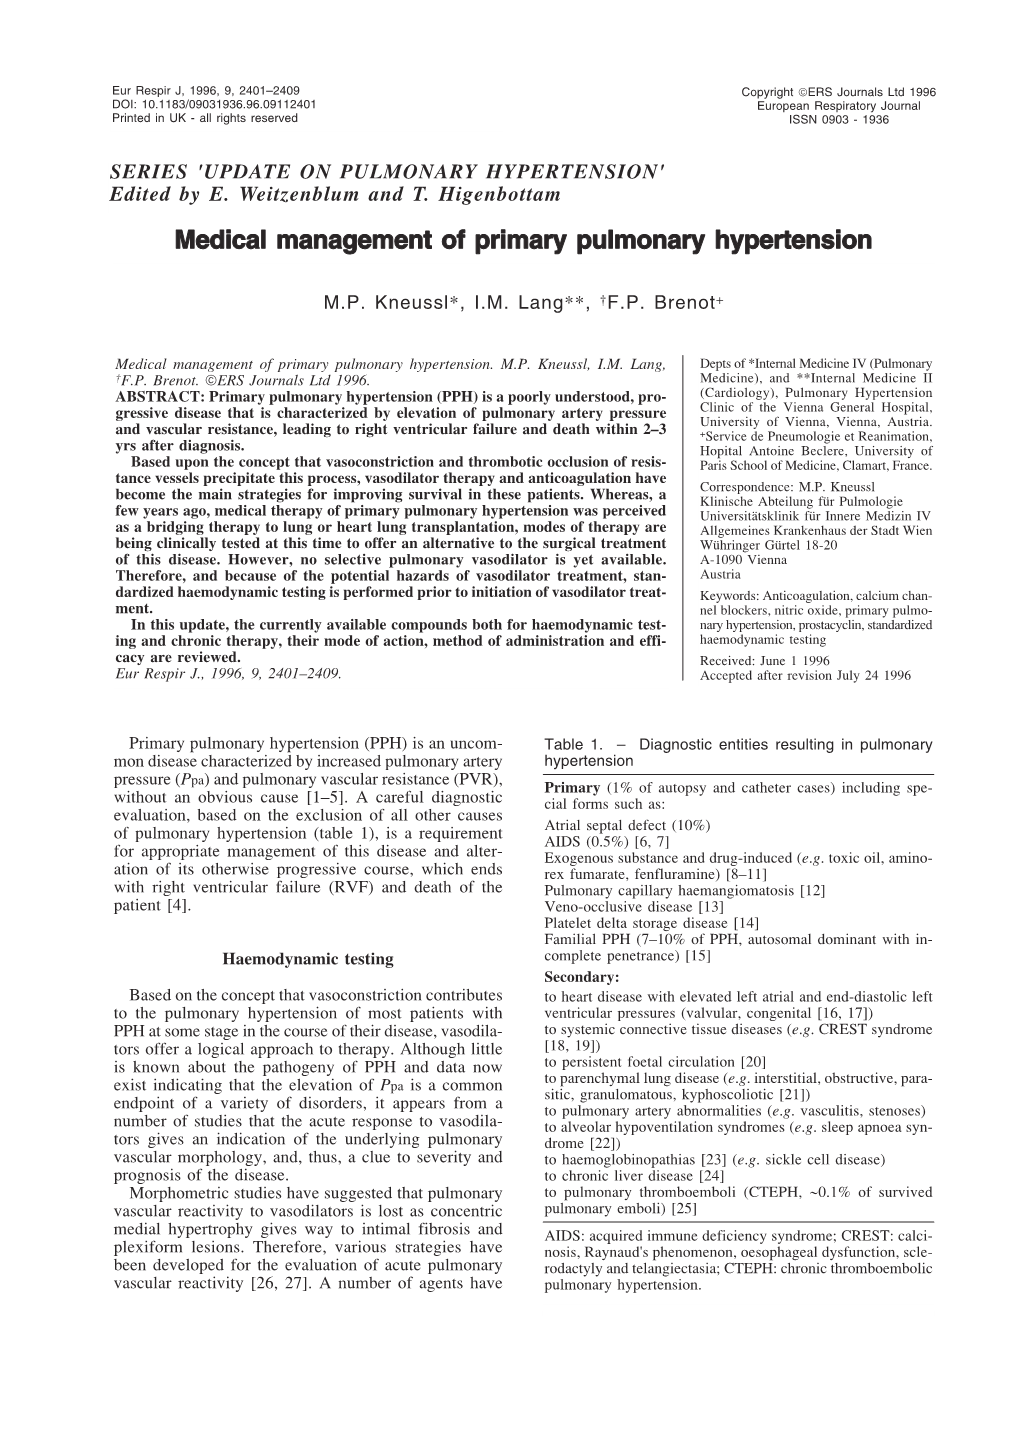 Medical Management of Primary Pulmonary Hypertension